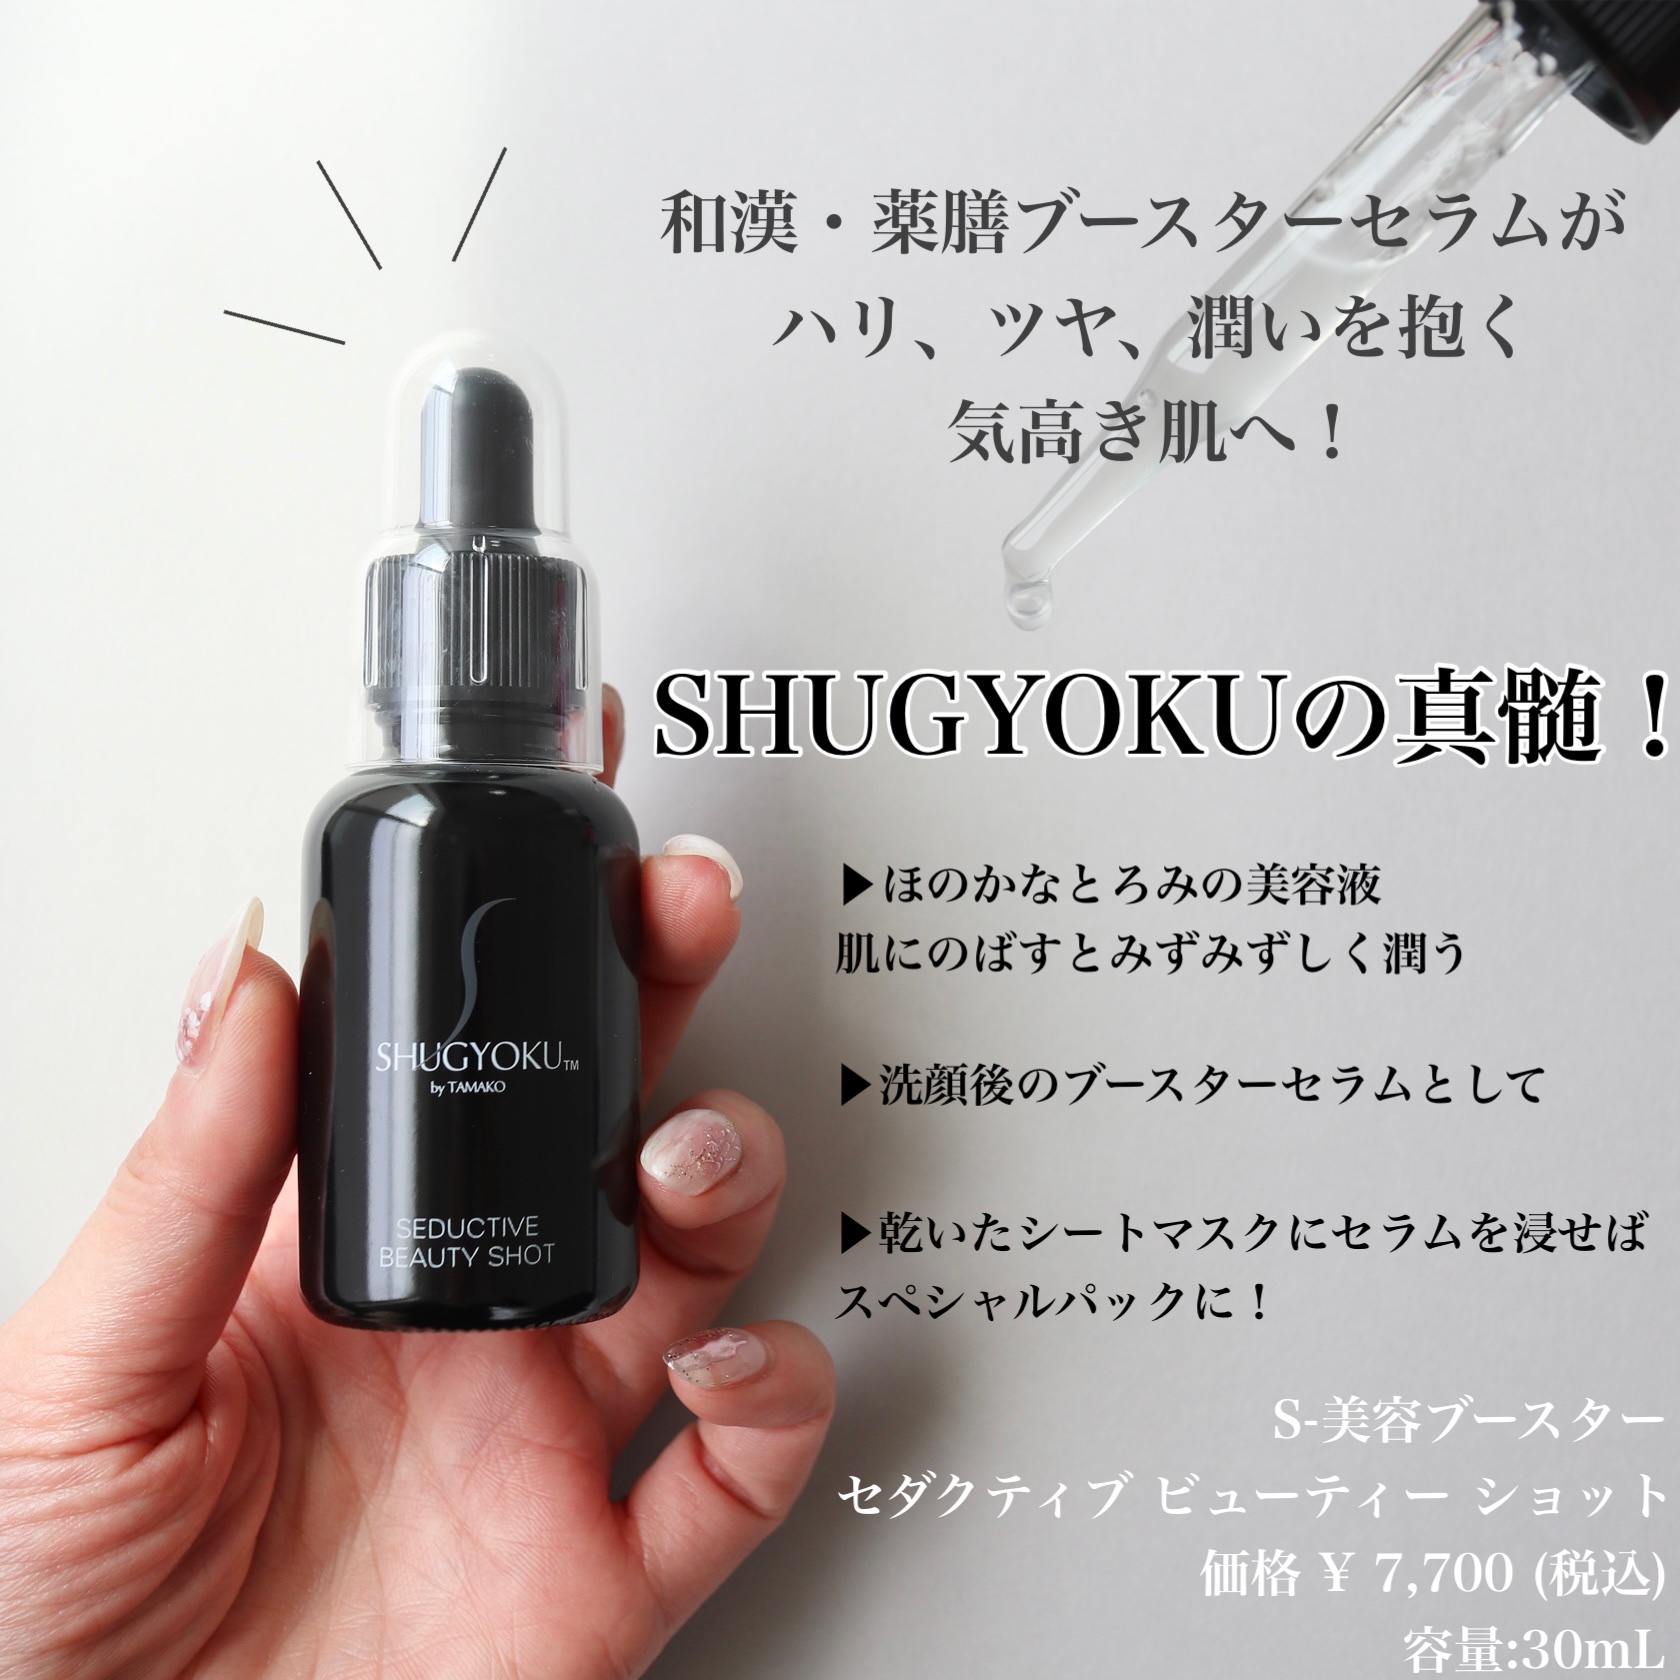 SHUGYOKU / Seductive Beauty Shotの公式商品情報｜美容・化粧品情報はアットコスメ